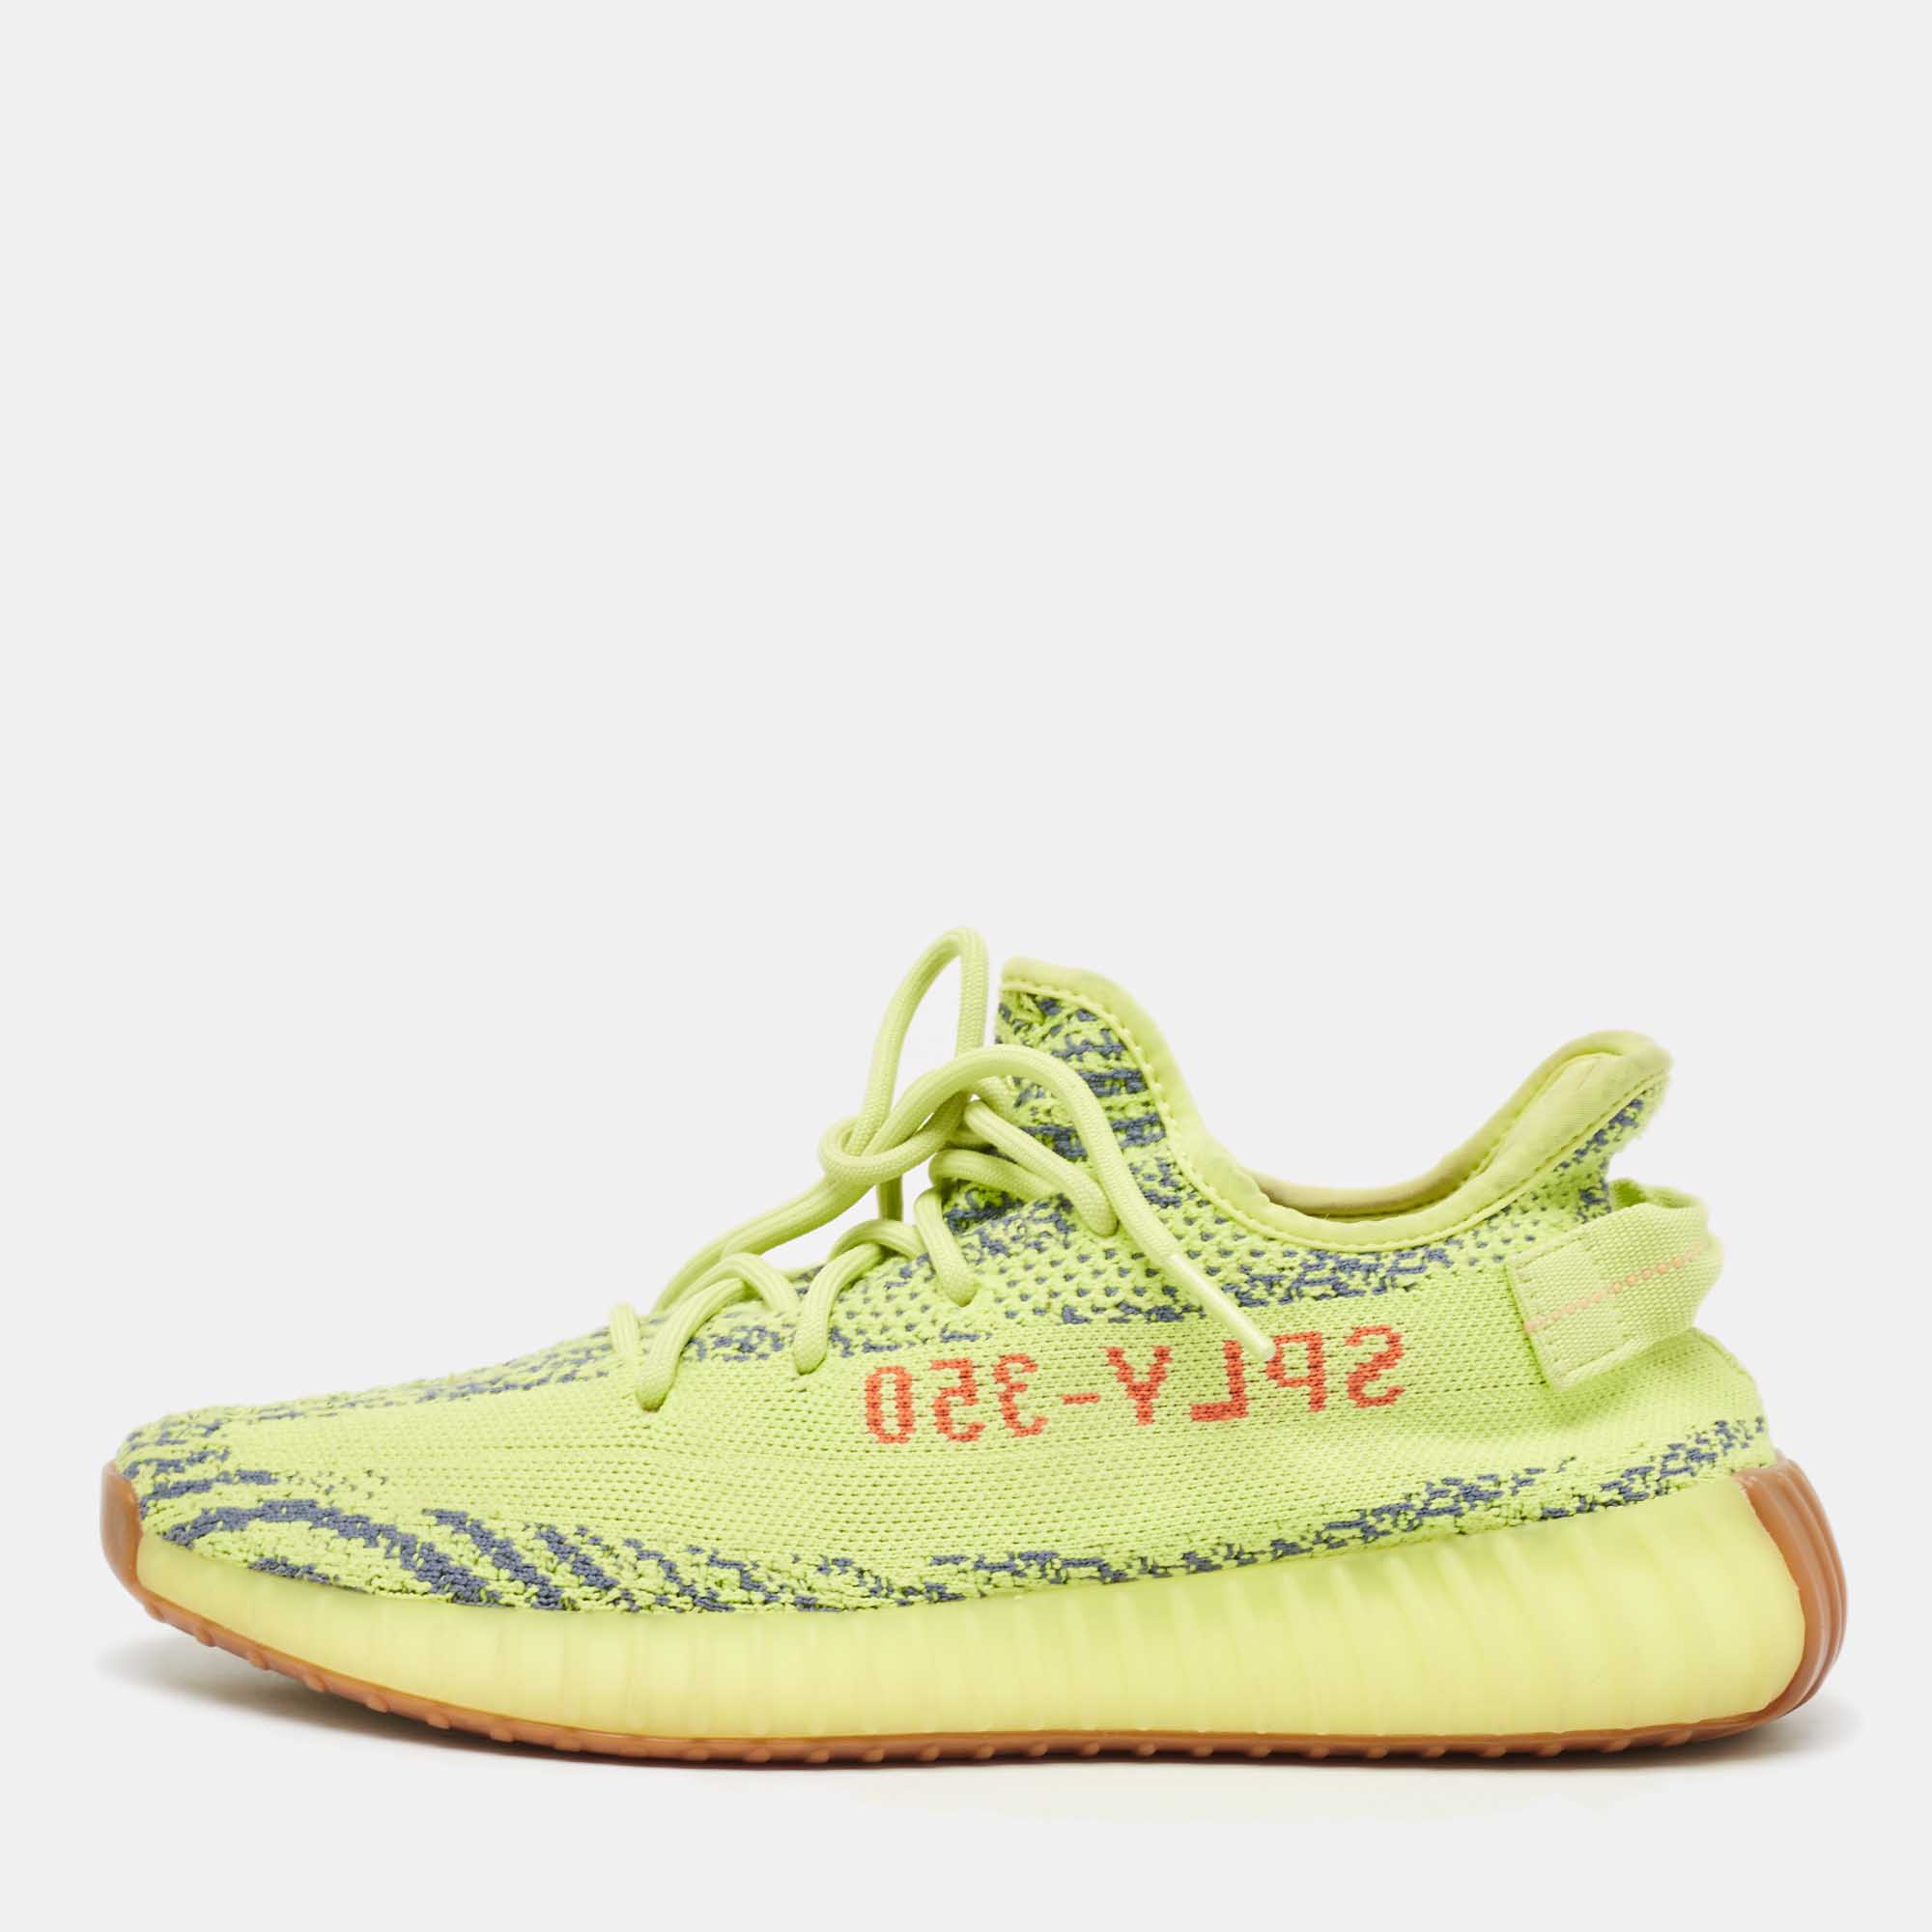 Yeezy x adidas neon yellow knit fabric boost 350 v2 semi frozen yellow sneakers size 42 2/3